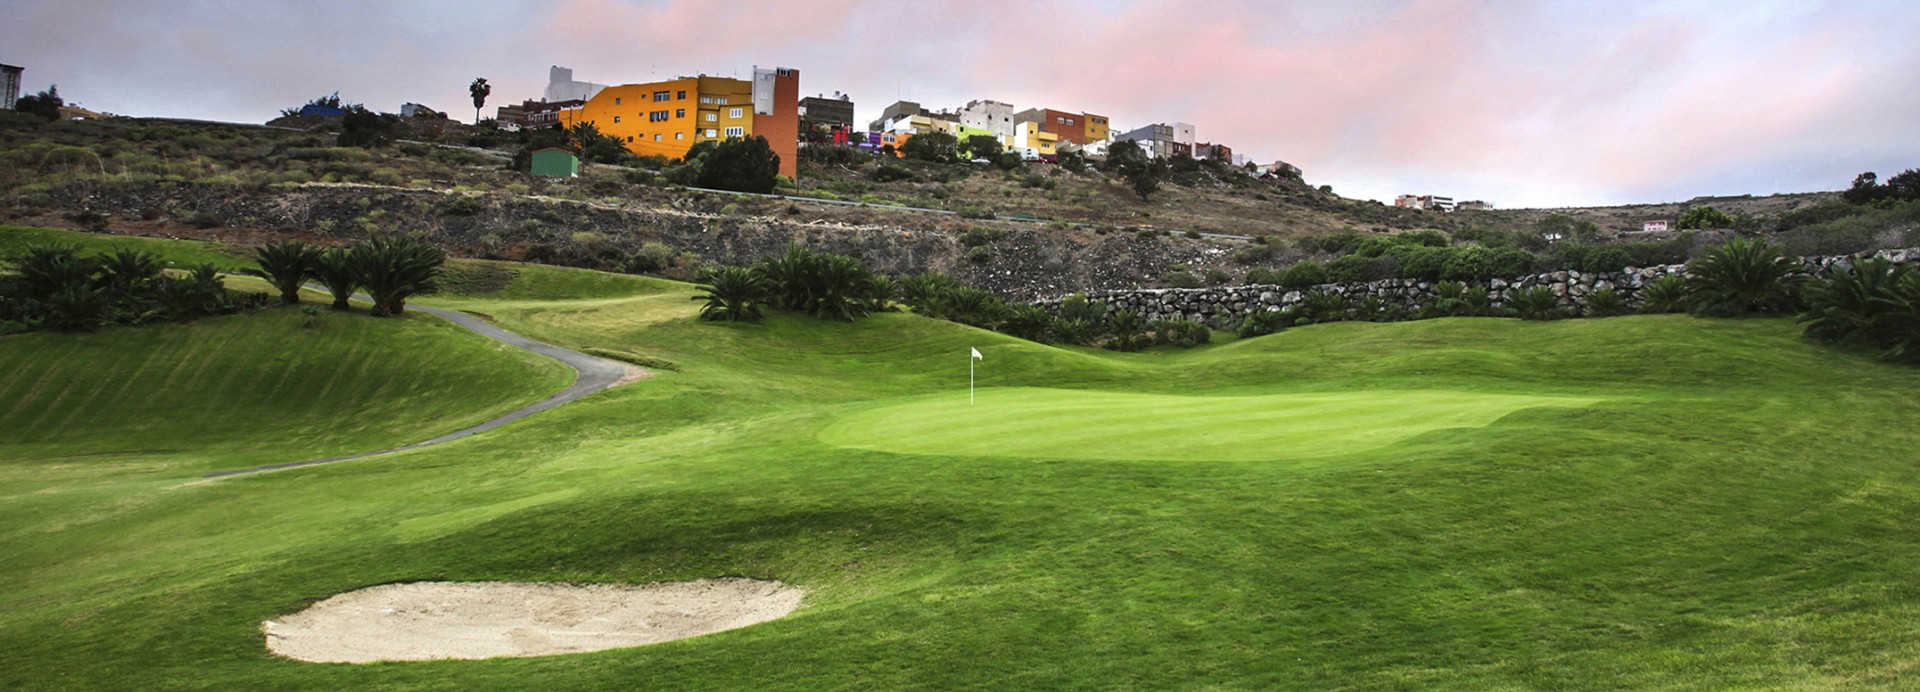 El Cortijo Club De Campo Golf  | Golfové zájezdy, golfová dovolená, luxusní golf